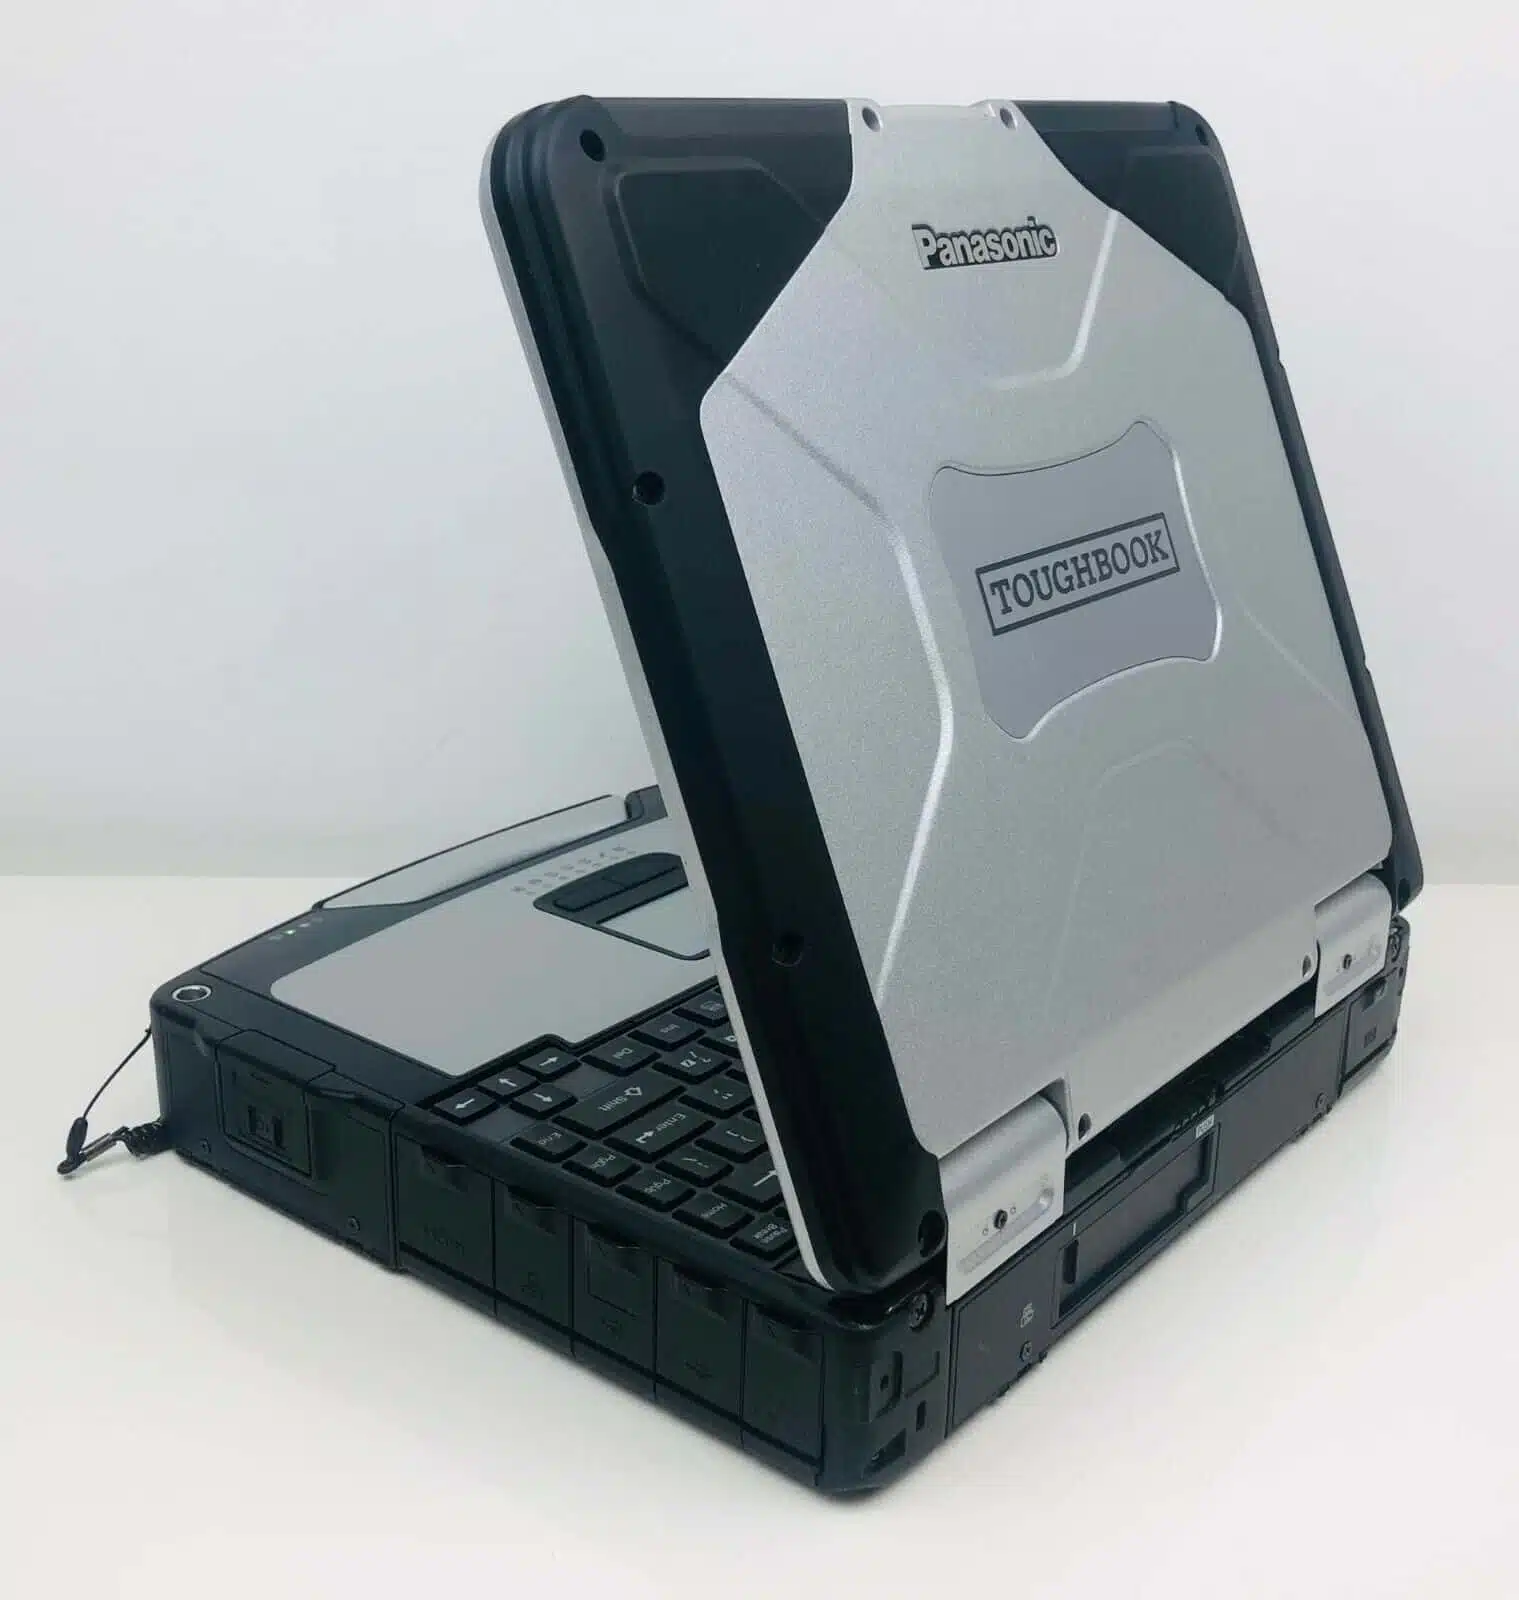 Panasonic Toughbook mk4 core i5 - Grau militar